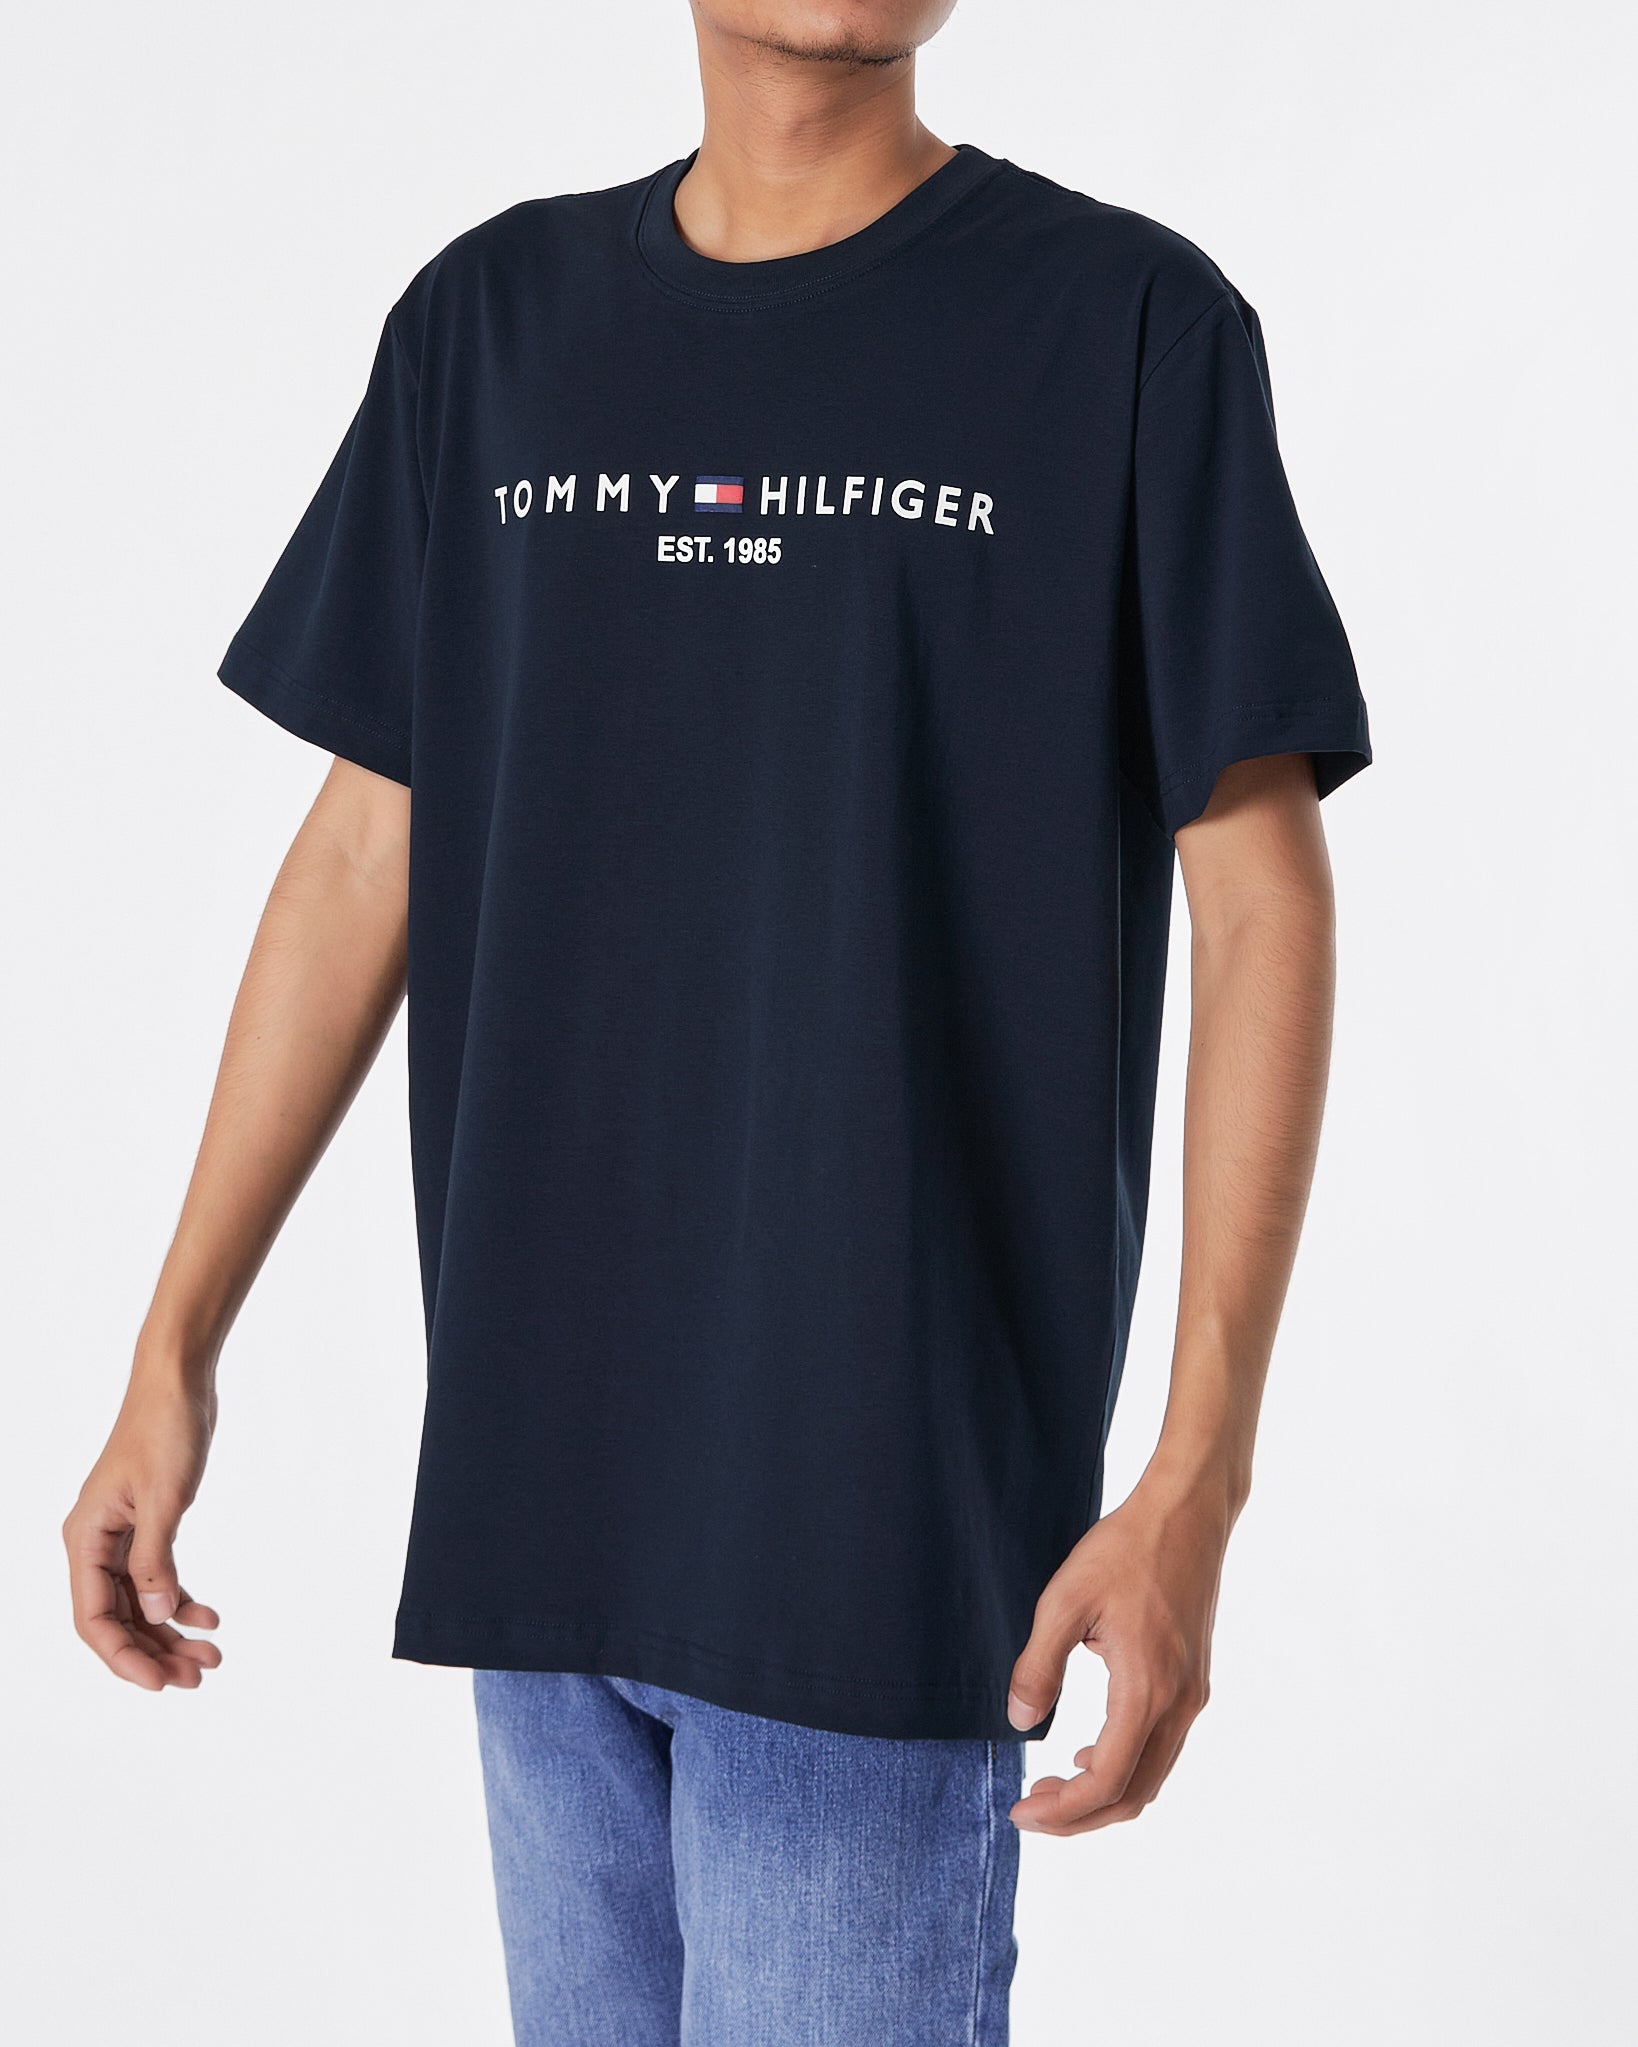 TH Logo Printed Men Blue T-Shirt 14.90